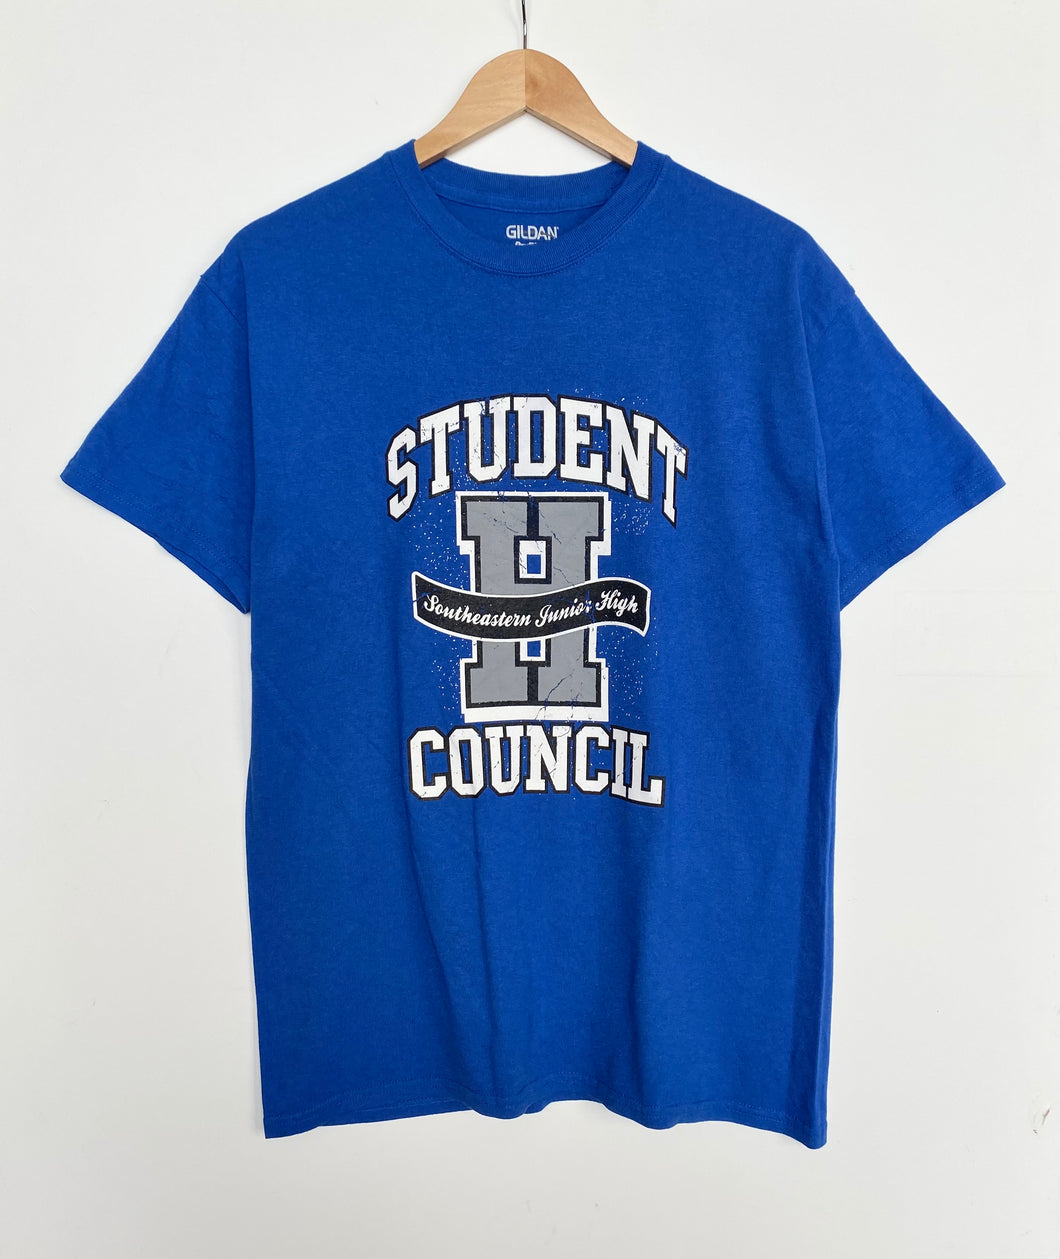 American College t-shirt (M)